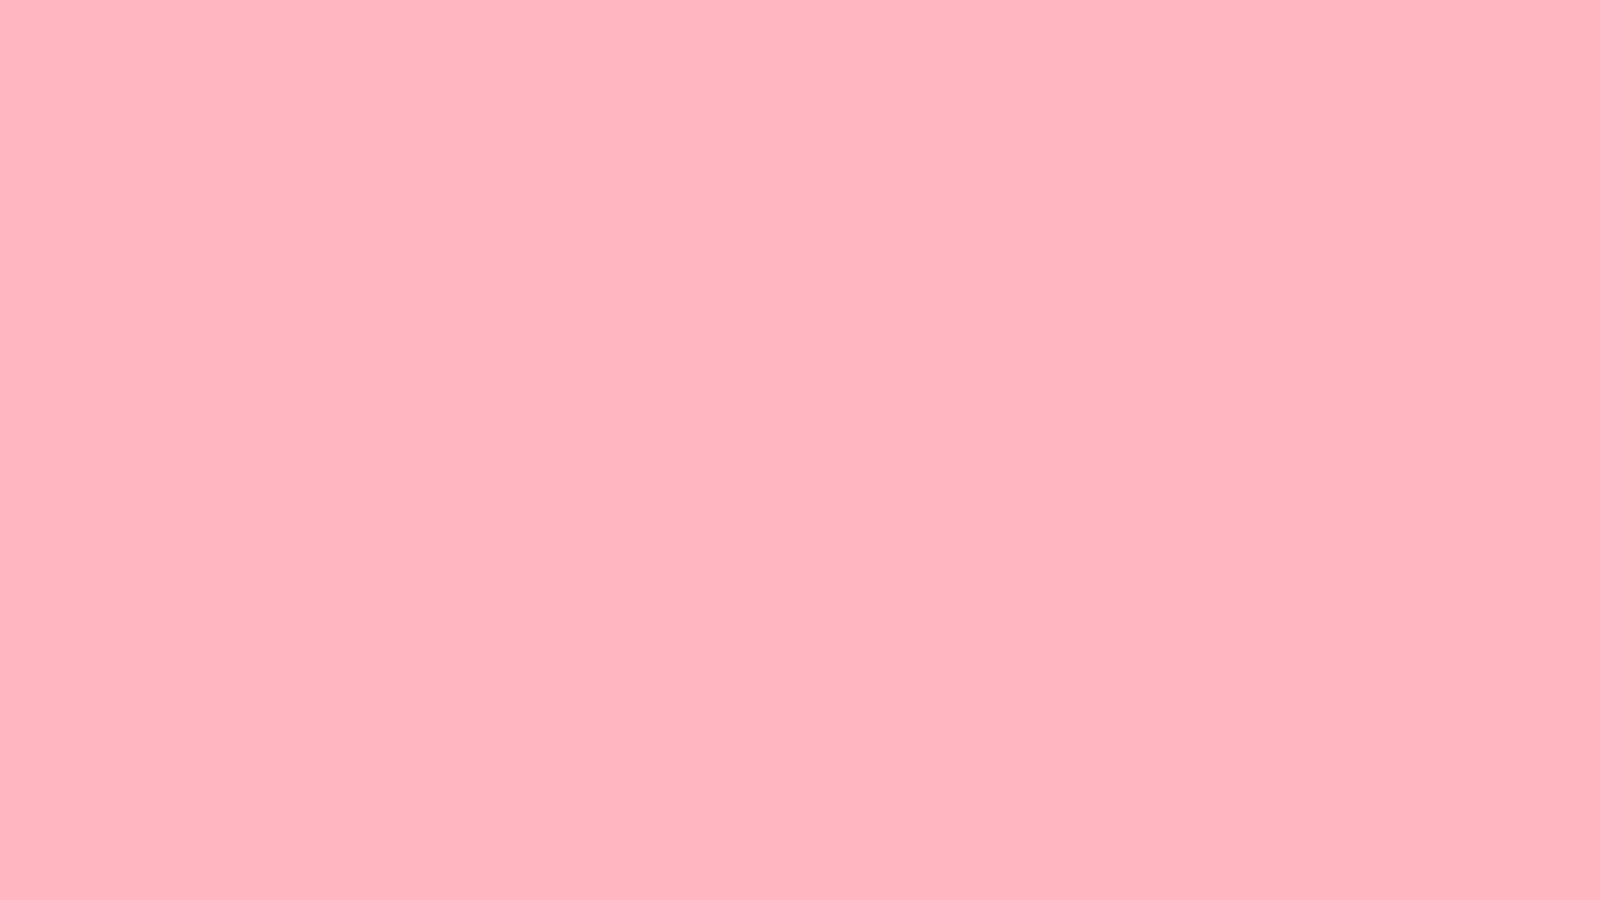 Light Pink Background Hd HD Wallpapers on picsfaircom